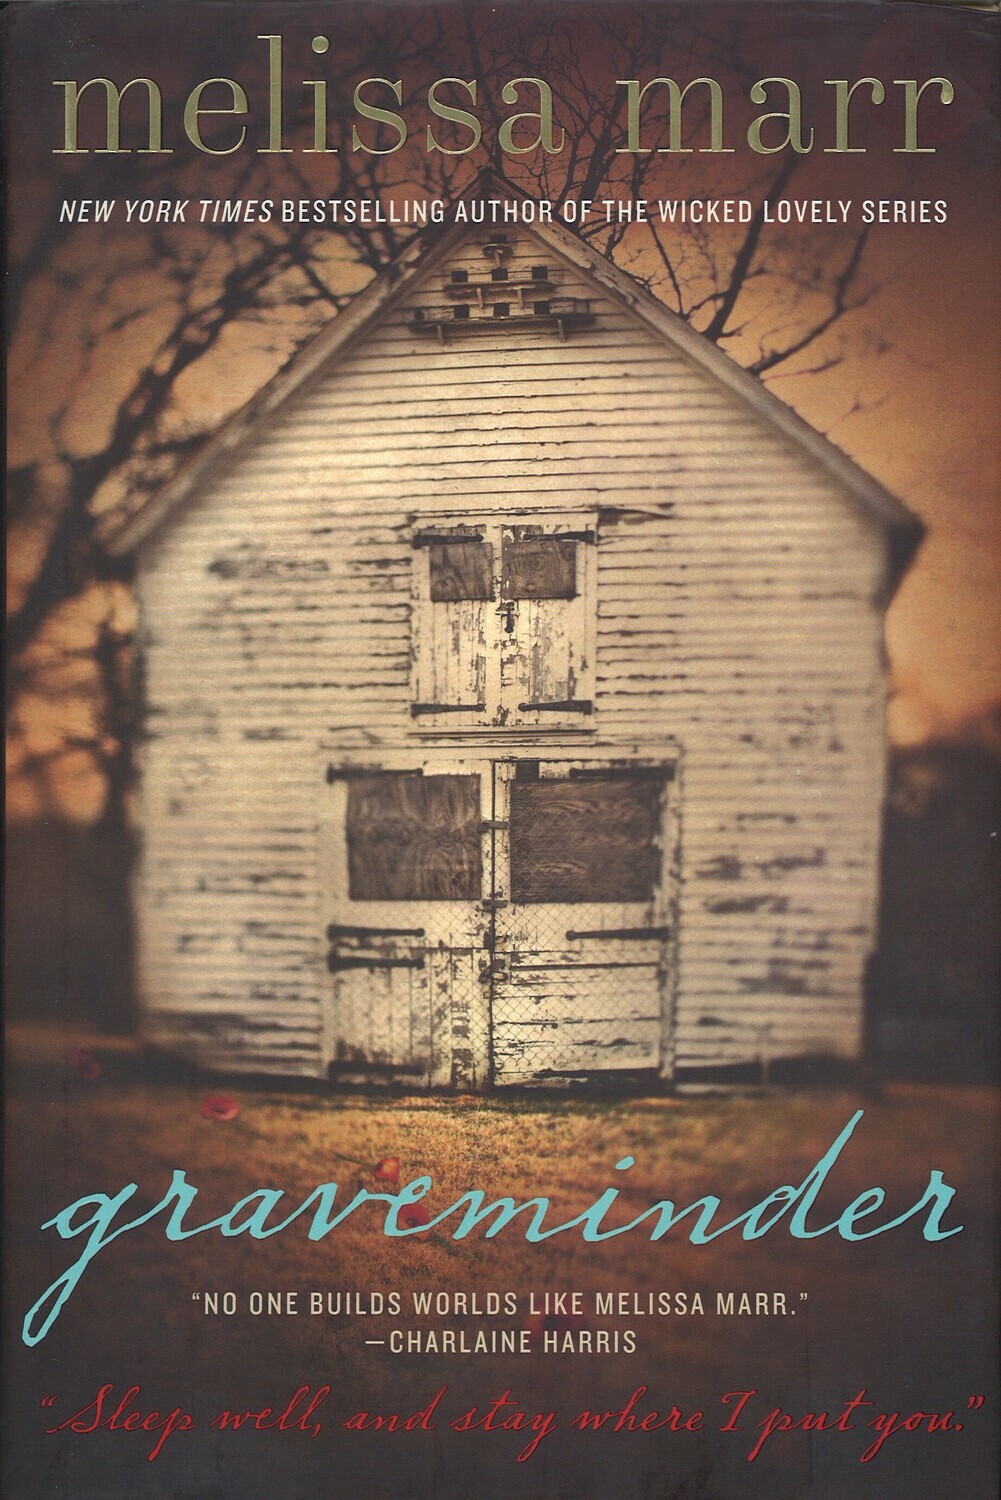 Graveminder